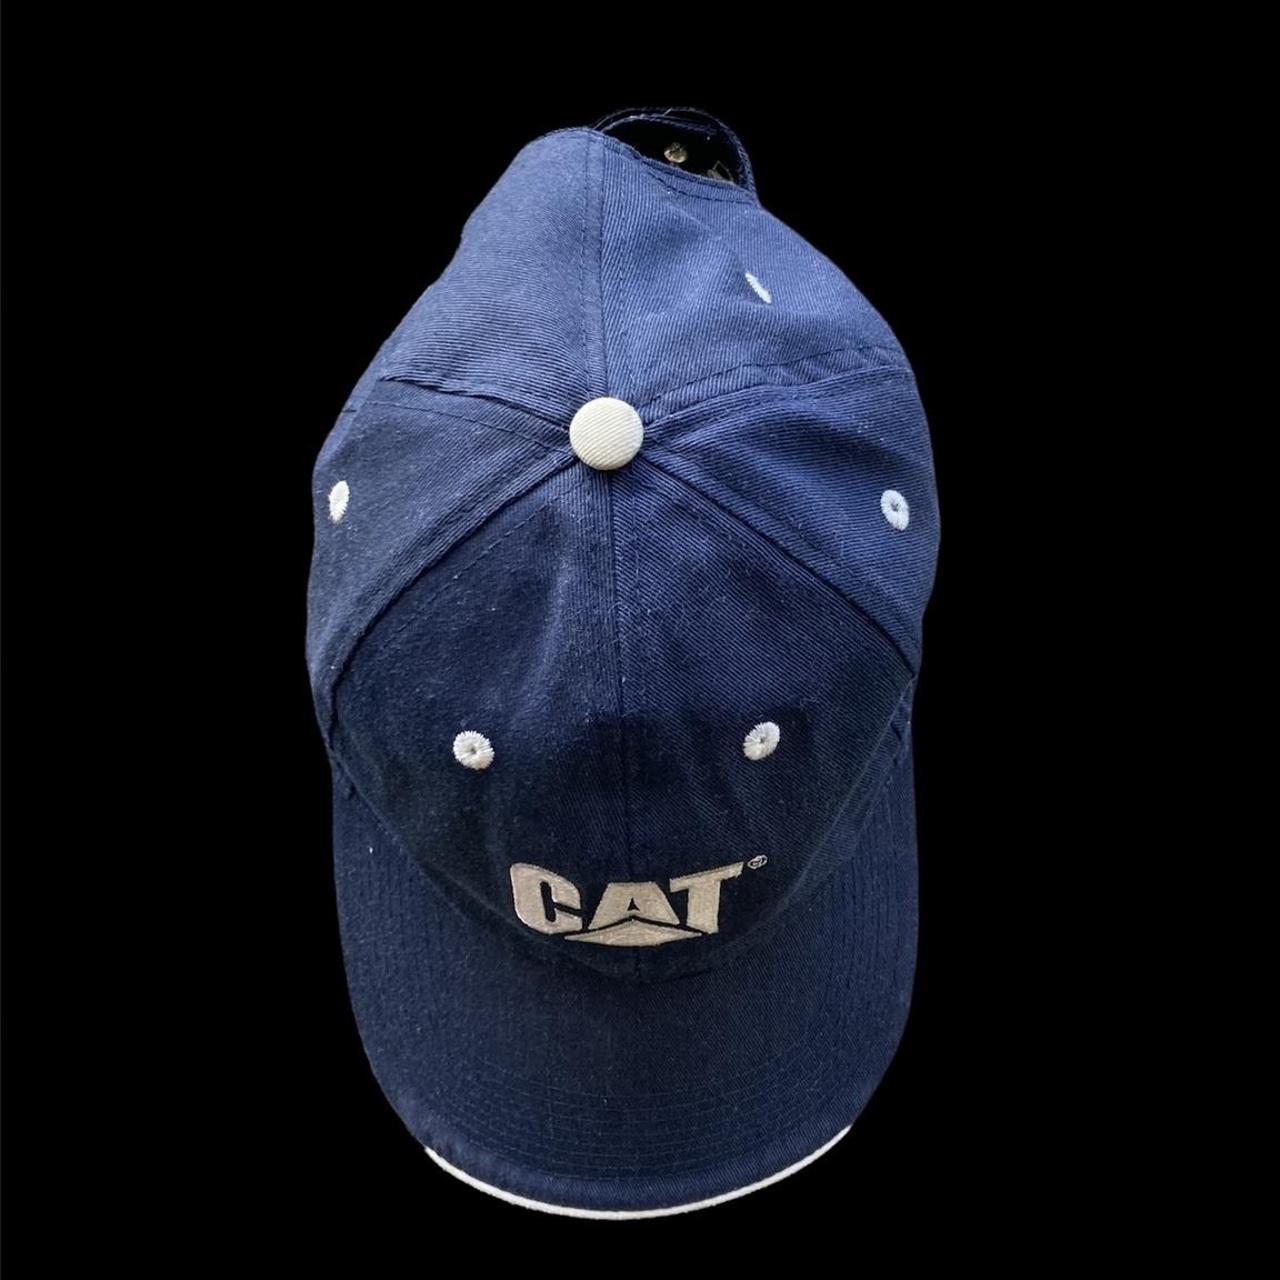 Product Image 1 - Caterpillar adjustable hat.

#caterpillar
#dadhat
#workwear